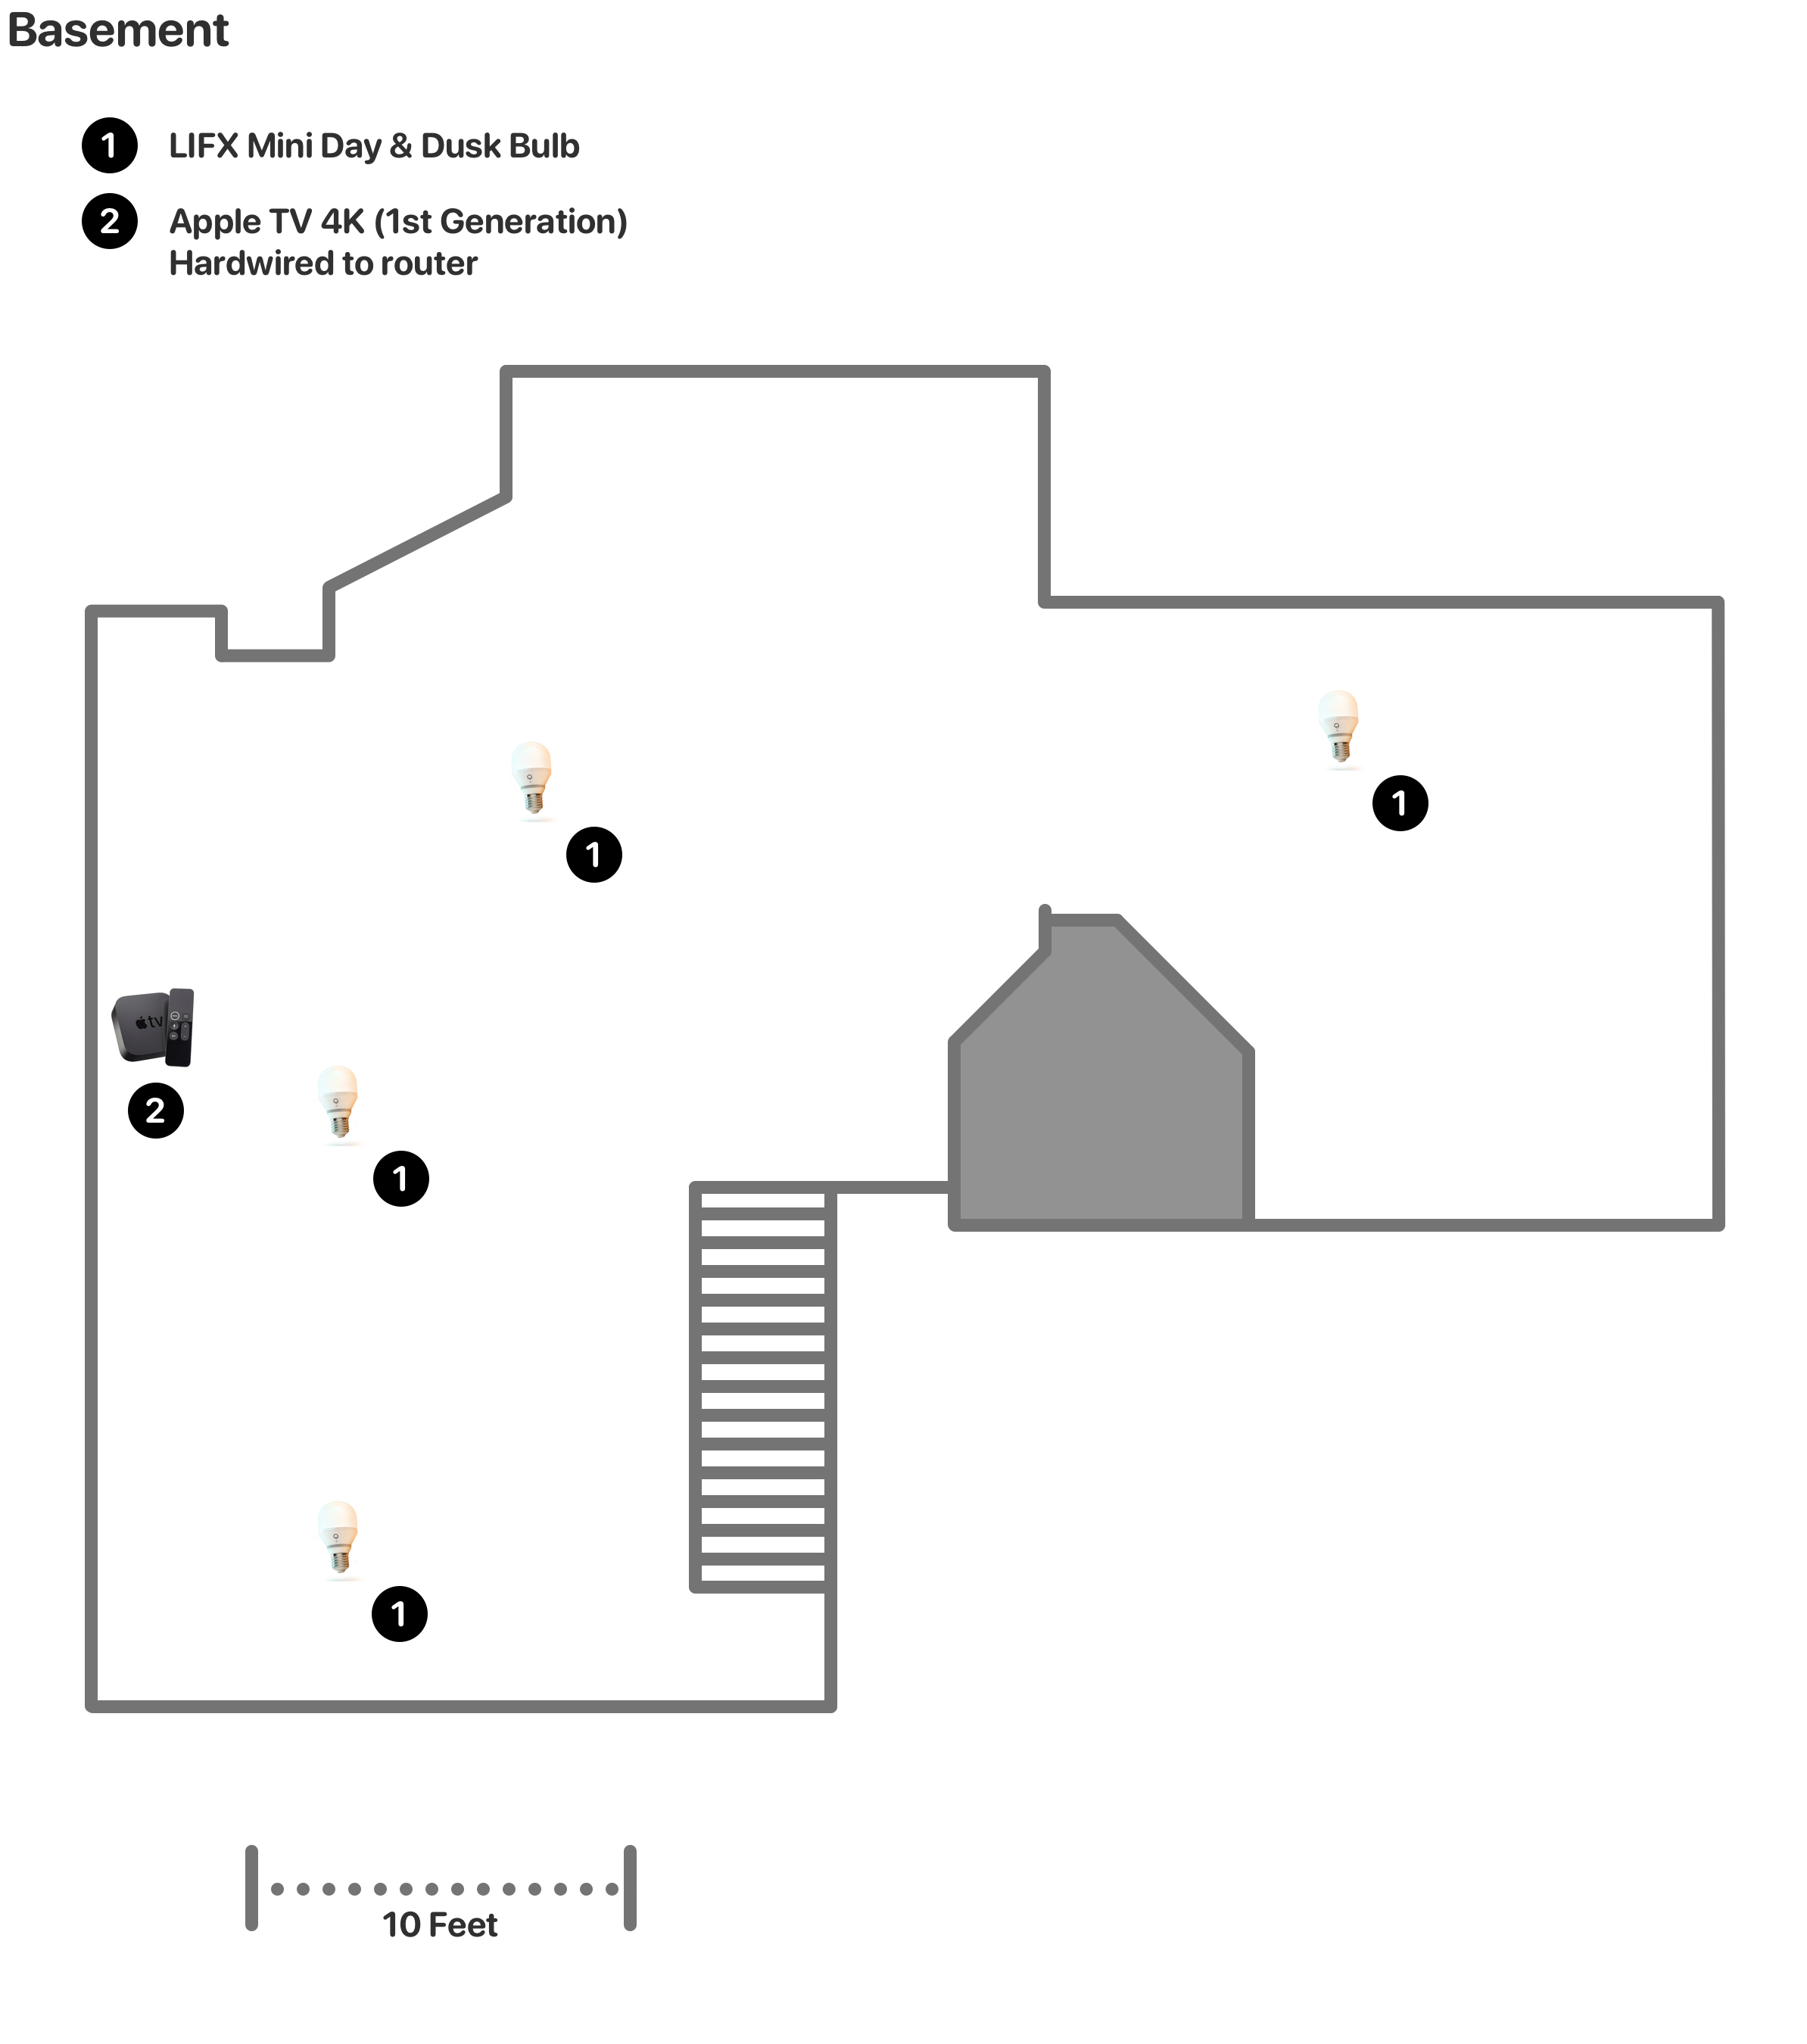 House layout, Basement